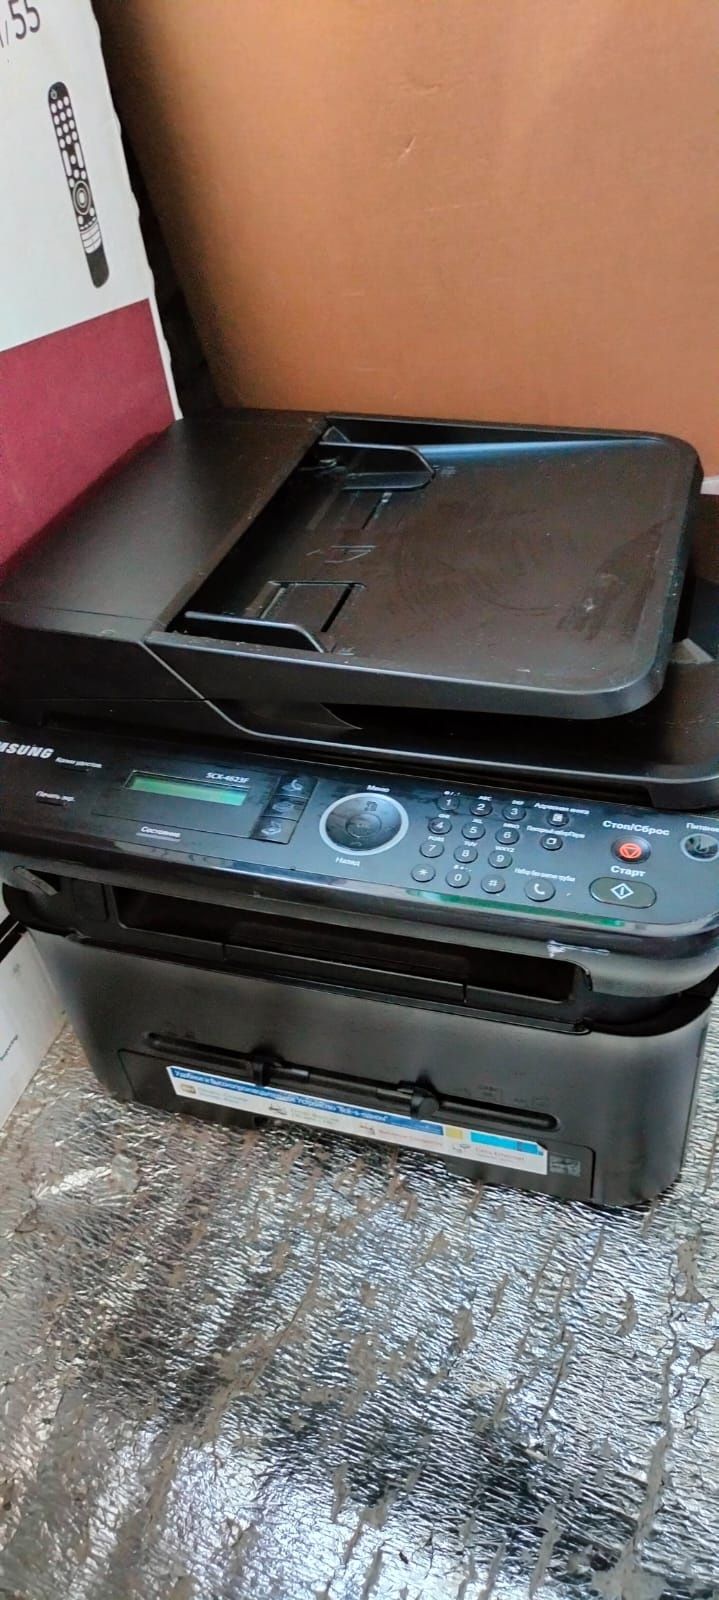 МФУ: Принтер, сканер, факс, копир Samsung SCX-4623F